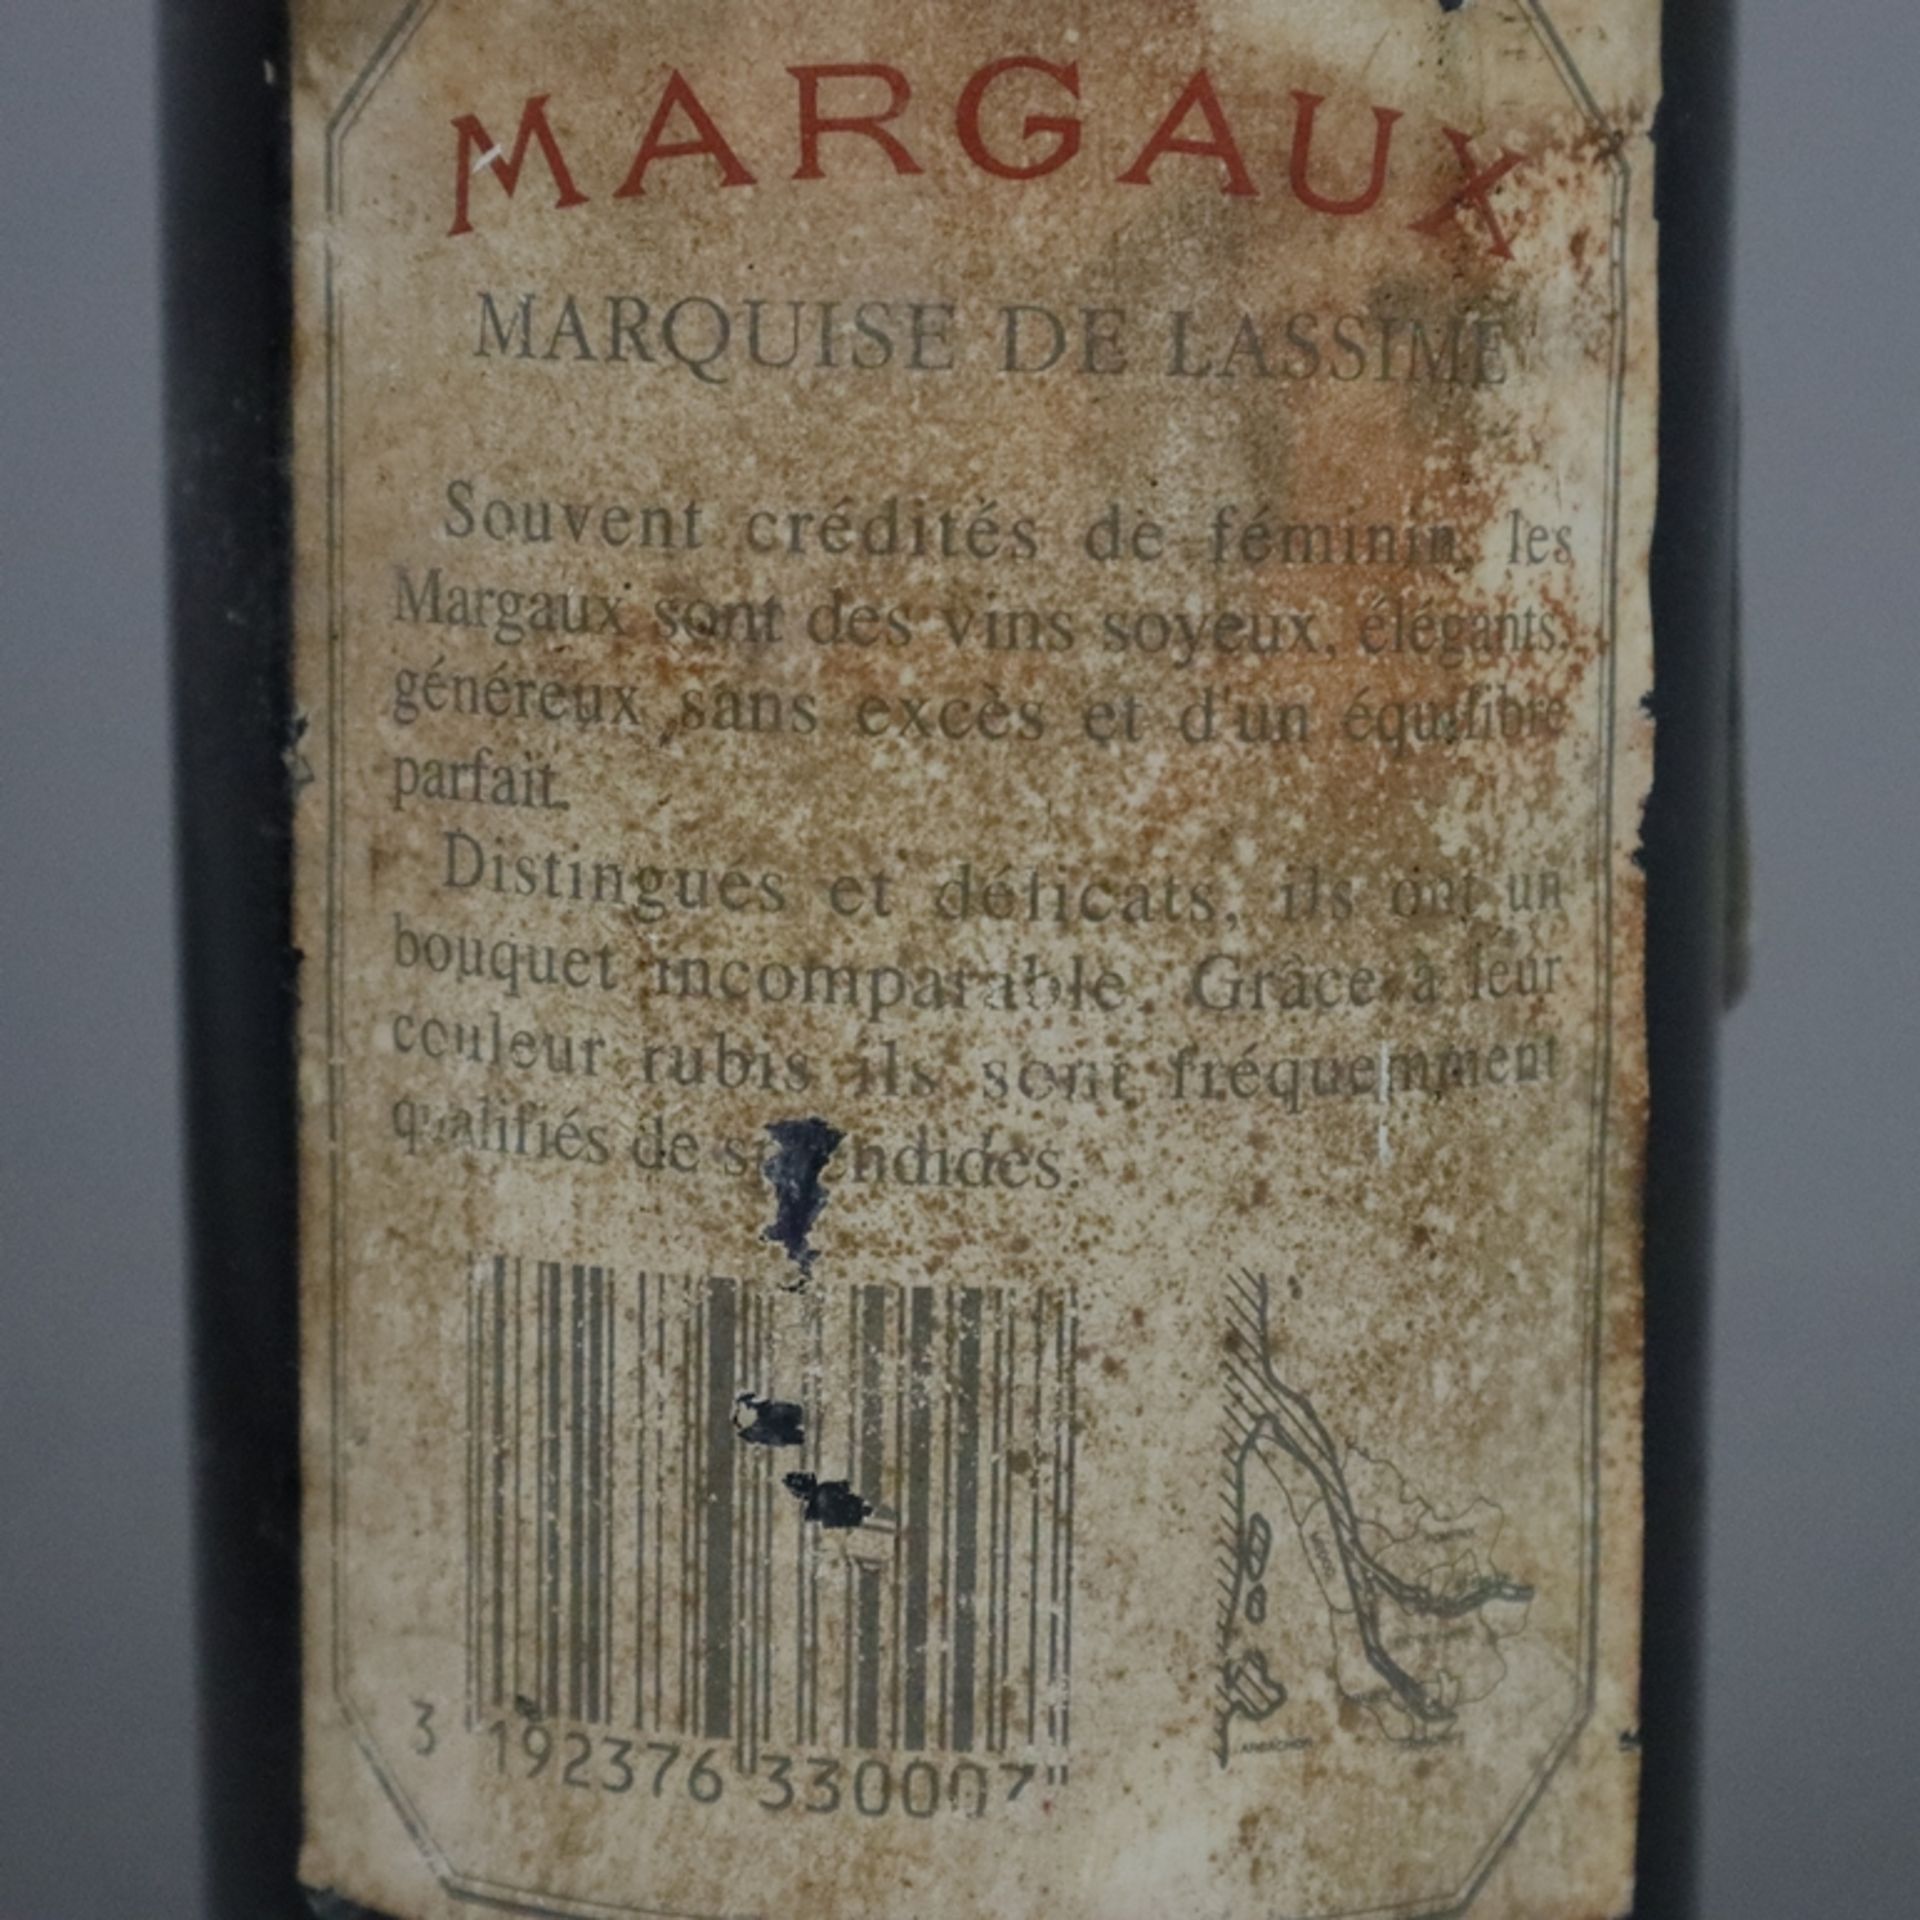 Weinkonvolut - 3 Flaschen 1987 Margaux, Marquise de Lassime, France, 75 cl, Füllstand: Top Shoulder - Image 5 of 8